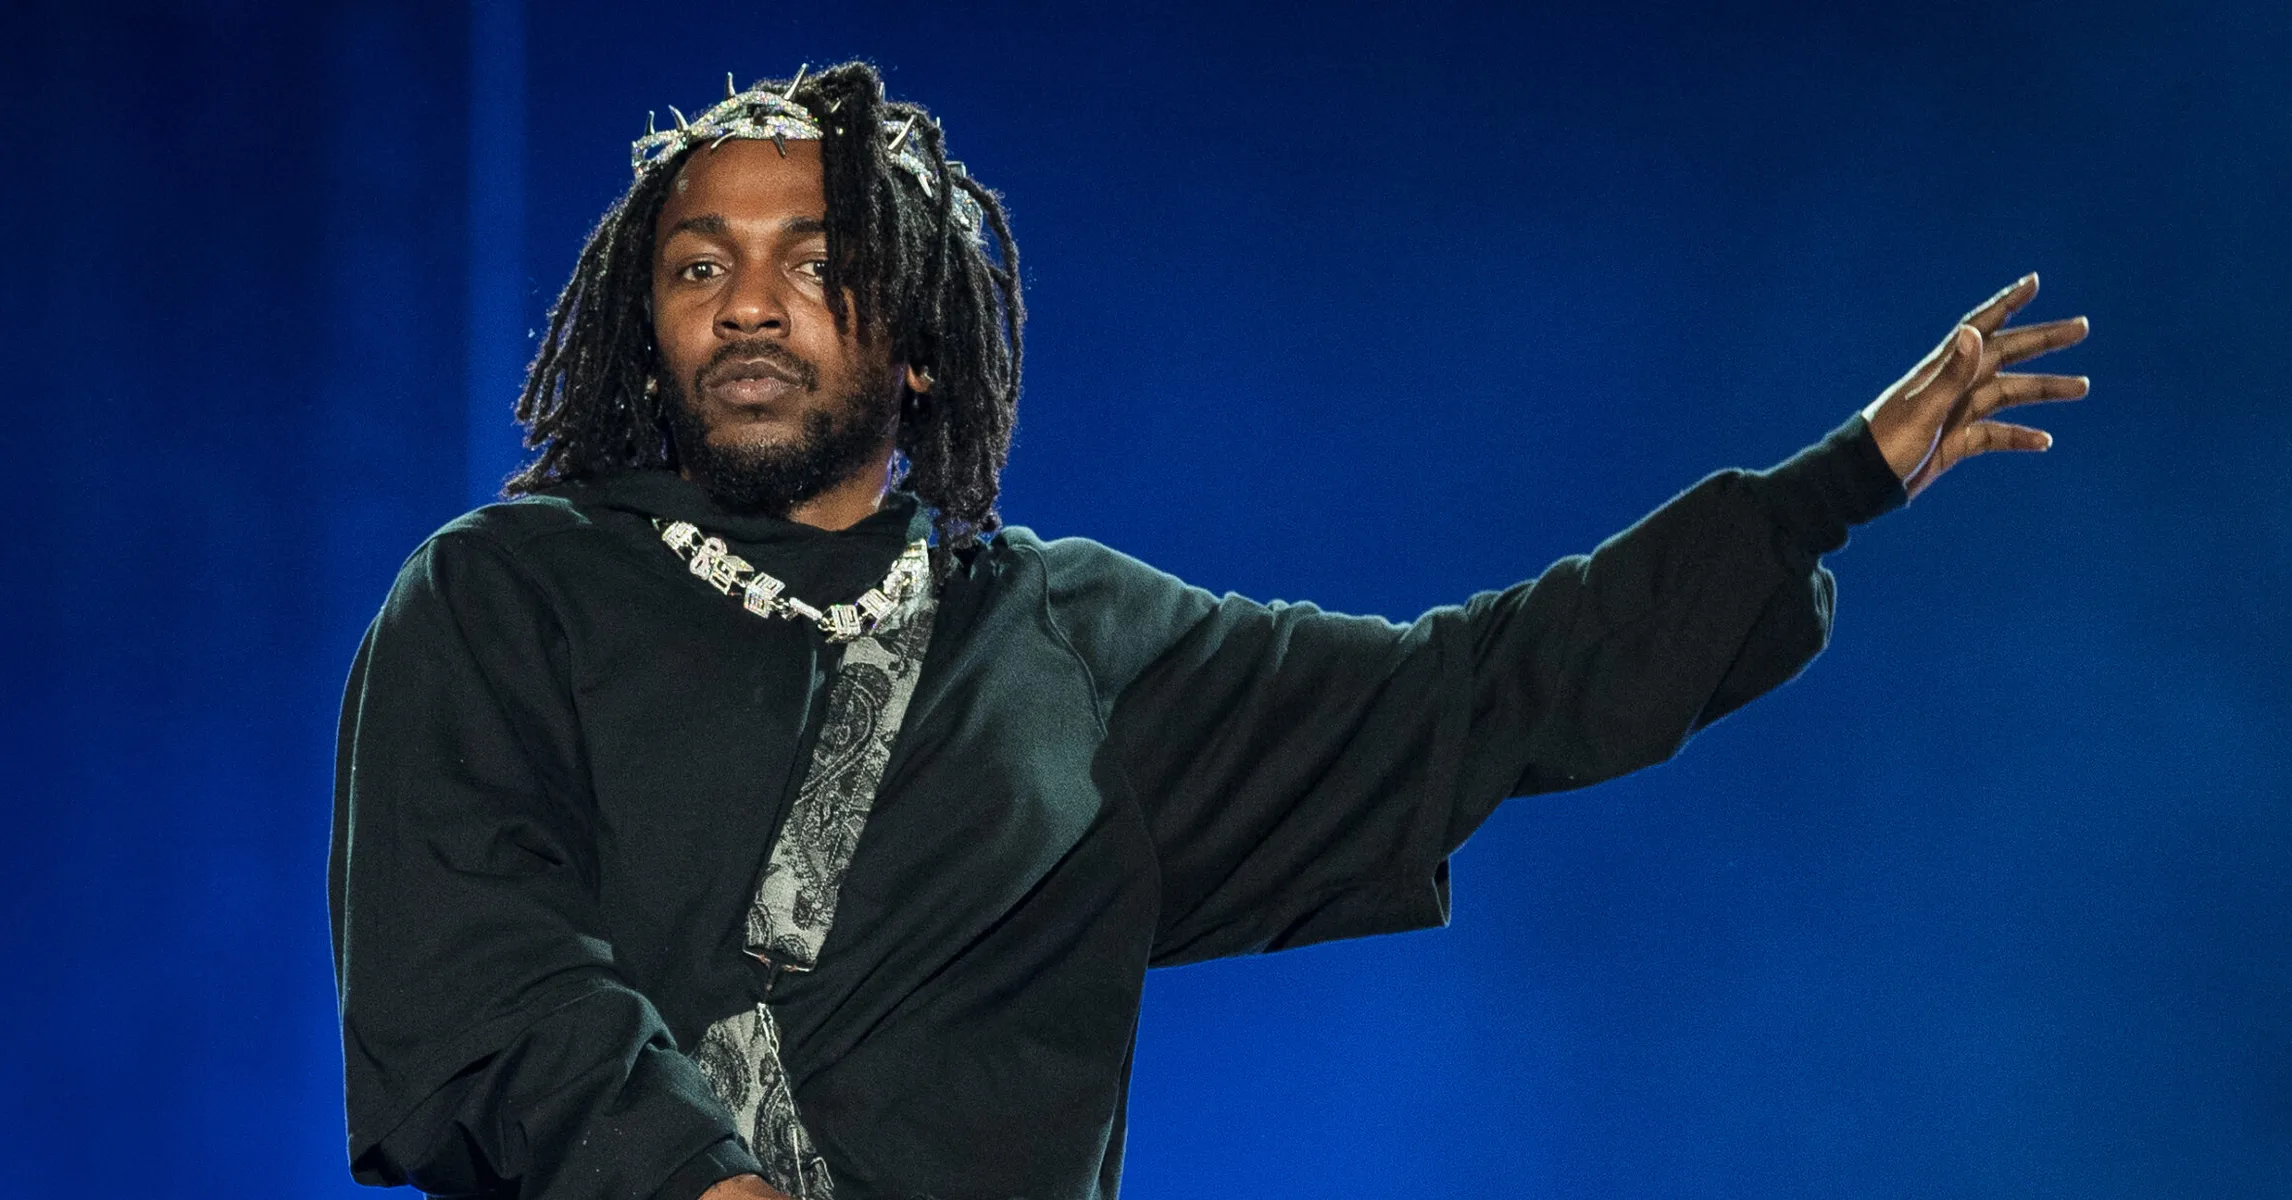 Kendrick Lamar Diss Track Surfaces Online, Immediately Shot Down As AI